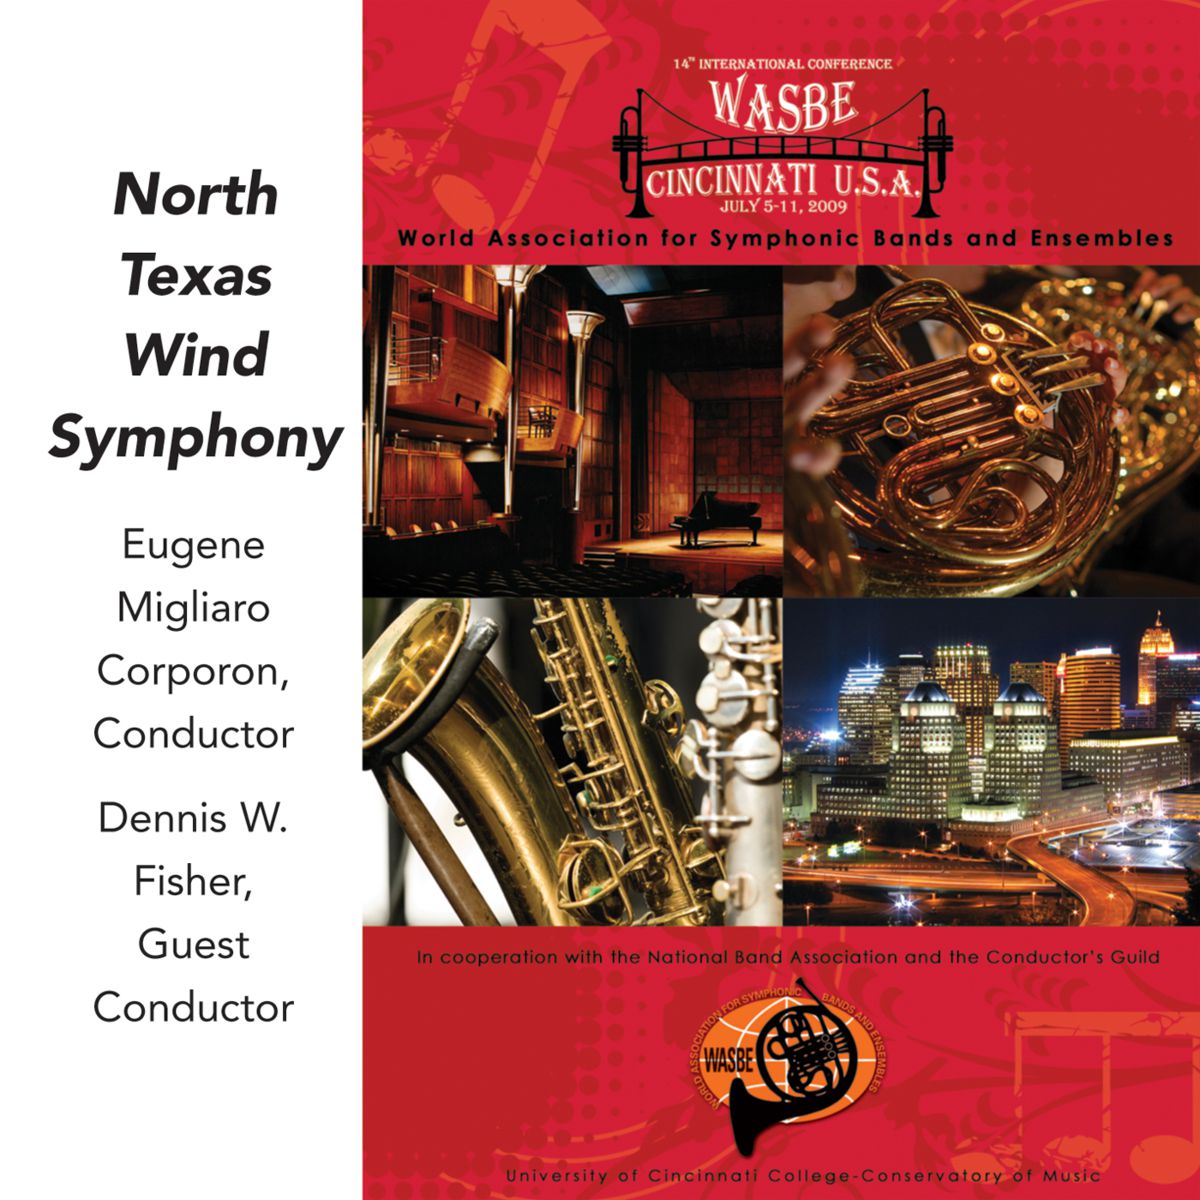 2009 WASBE Cincinnati, USA: North Texas Wind Symphony - hacer clic aqu